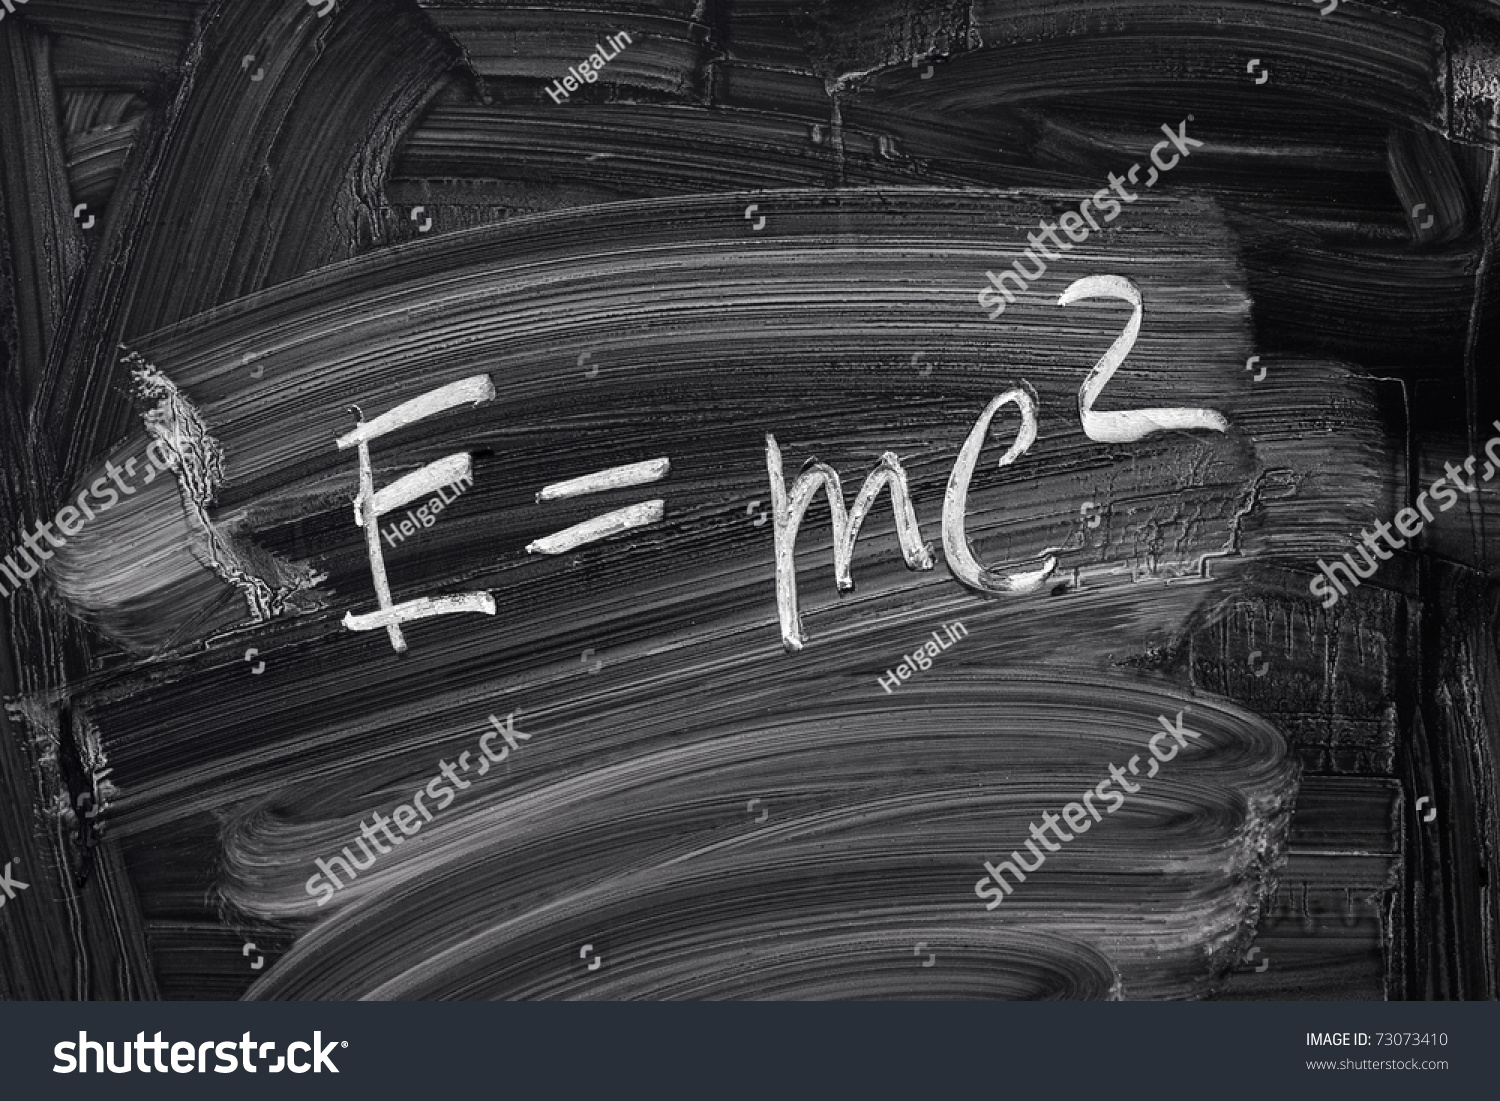 stock photo e mc theory of relativity writings on blackboard 73073410